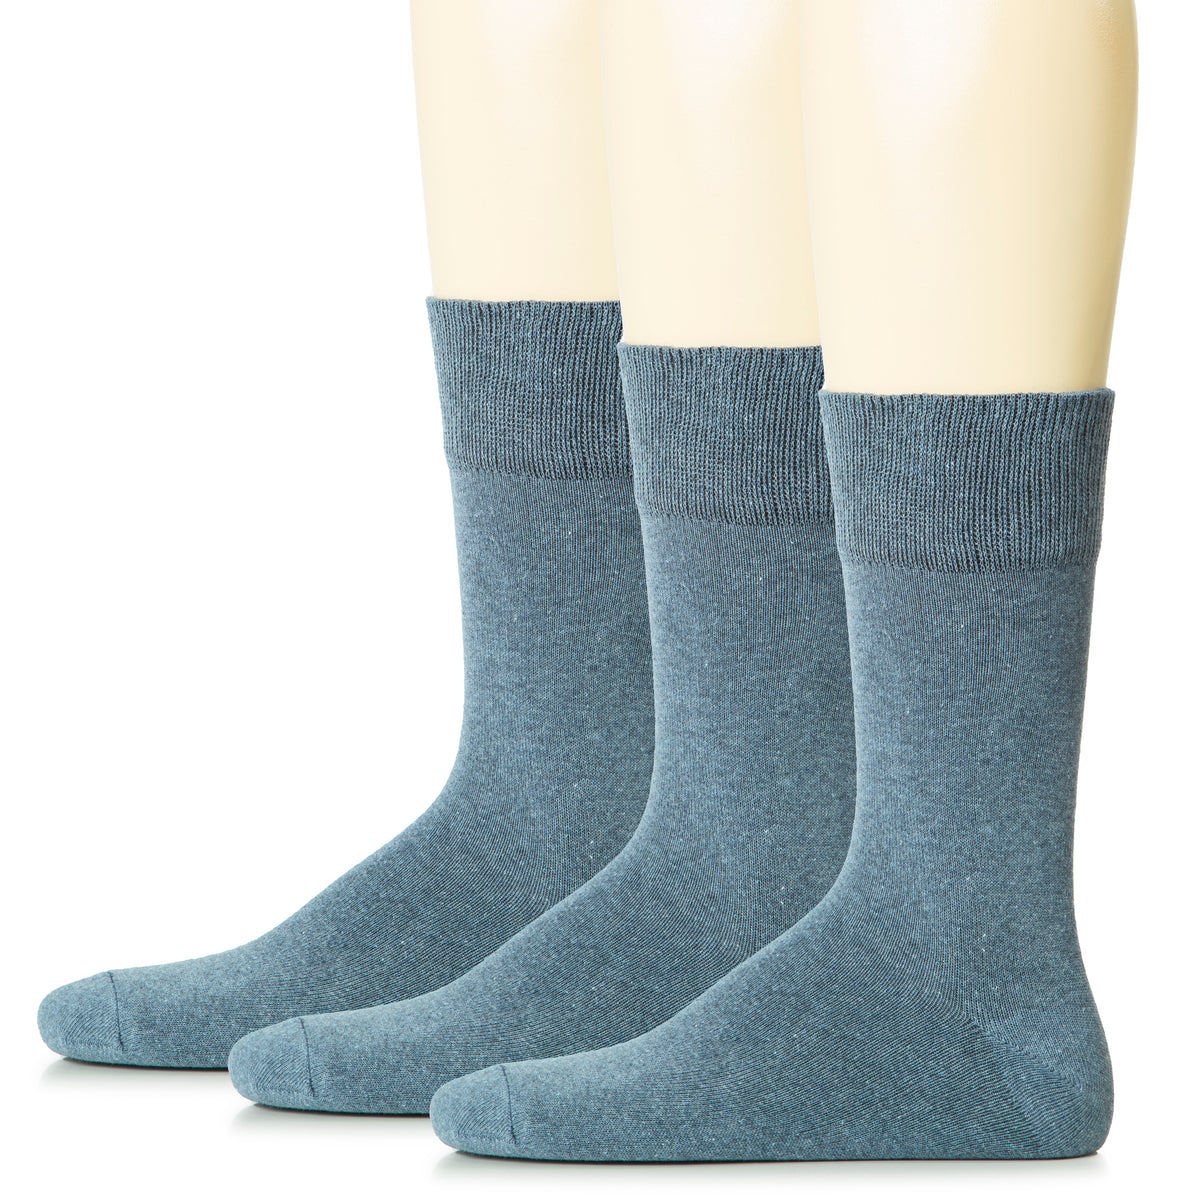 Hugh Ugoli Men Cotton Dress Socks XL / L / M / S Sizes, 3 Pairs | Shoe Size: 6-8 | Navy Blue